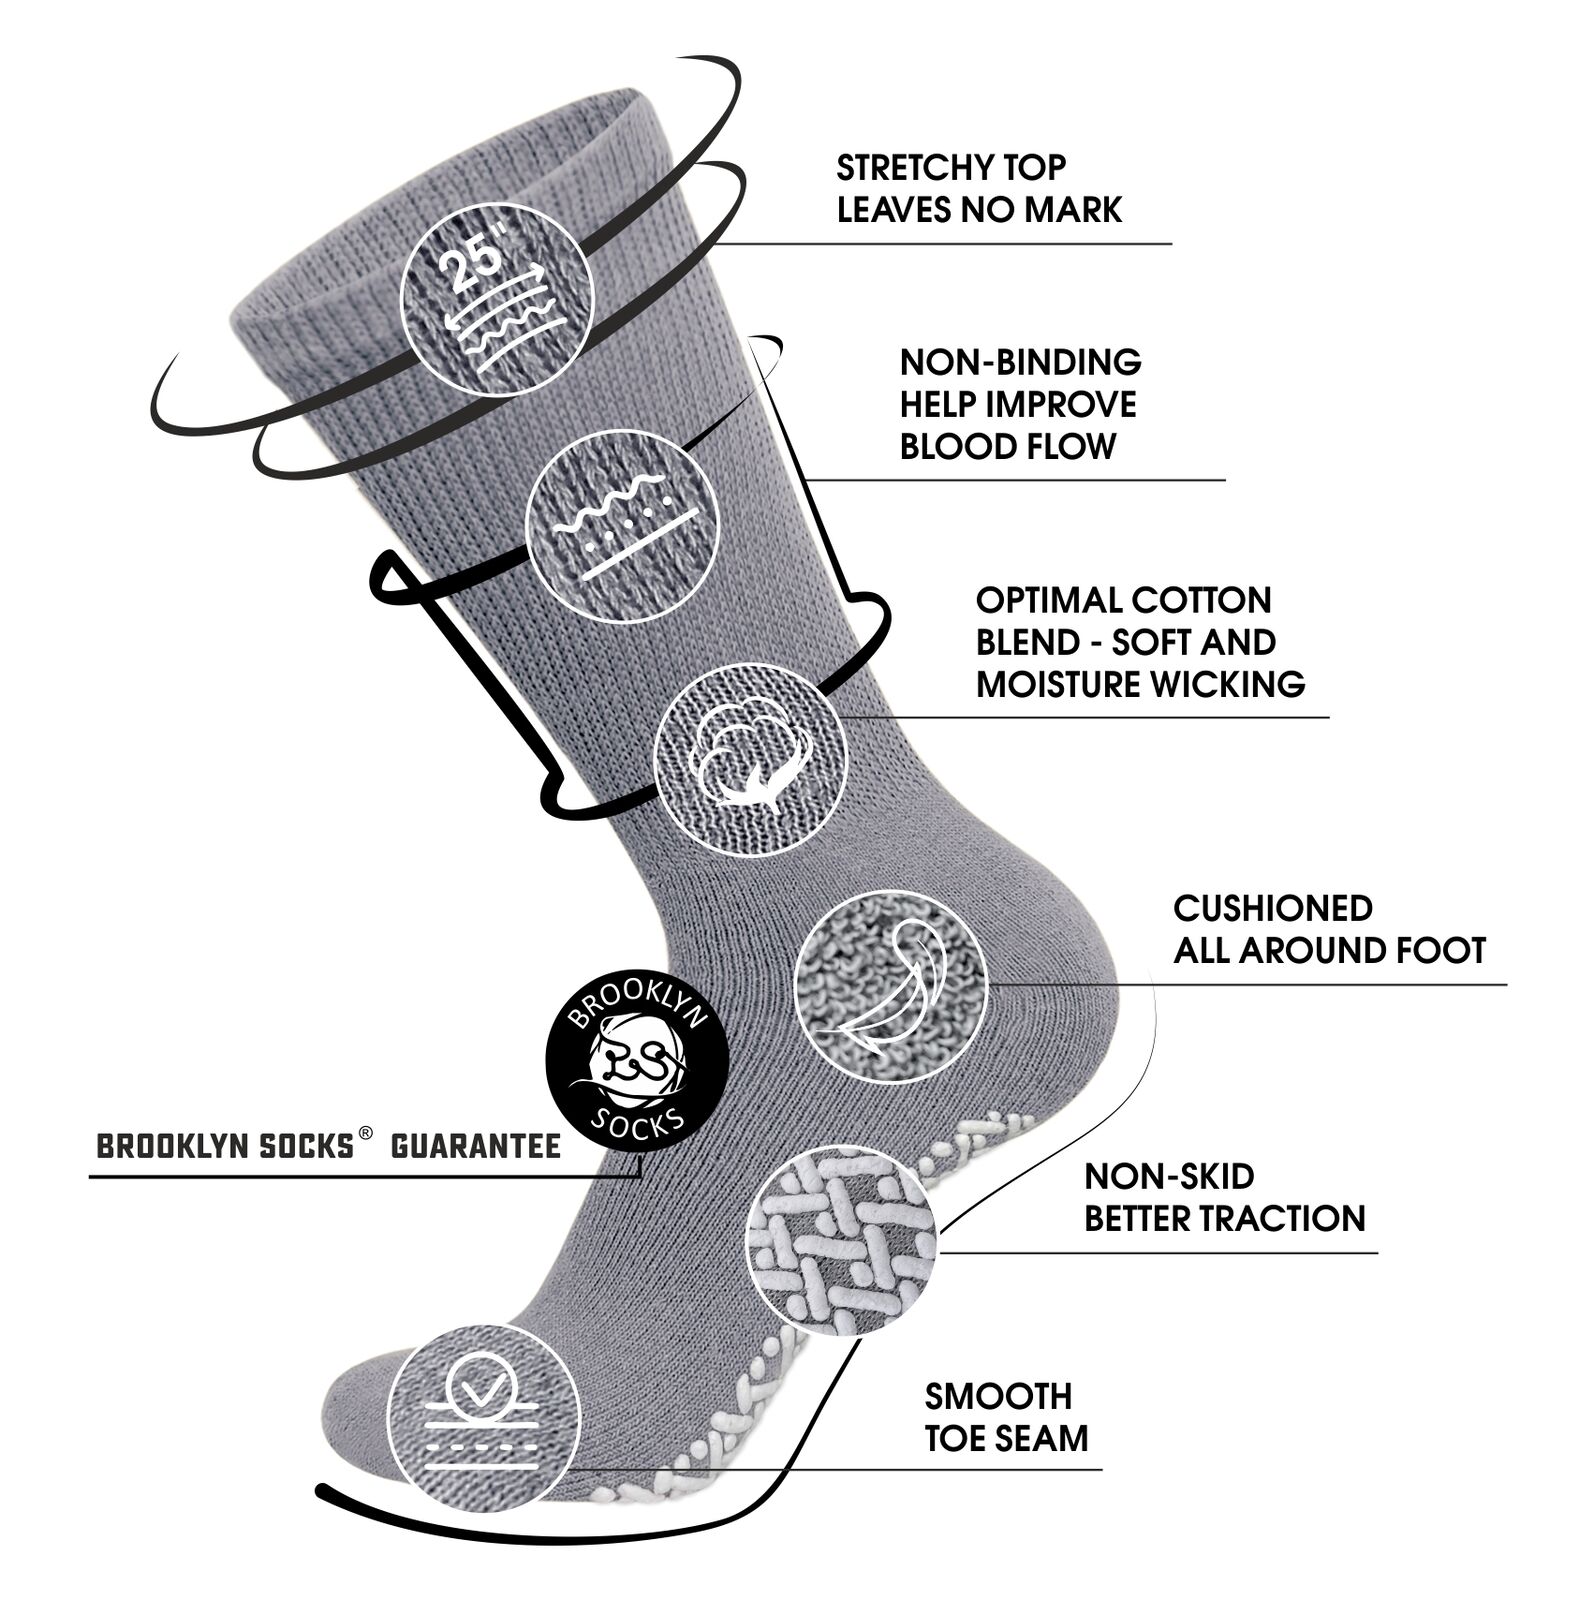 Non-Skid Diabetic Crew Socks, Non Binding Top Therapeutic Cotton Gripper Socks